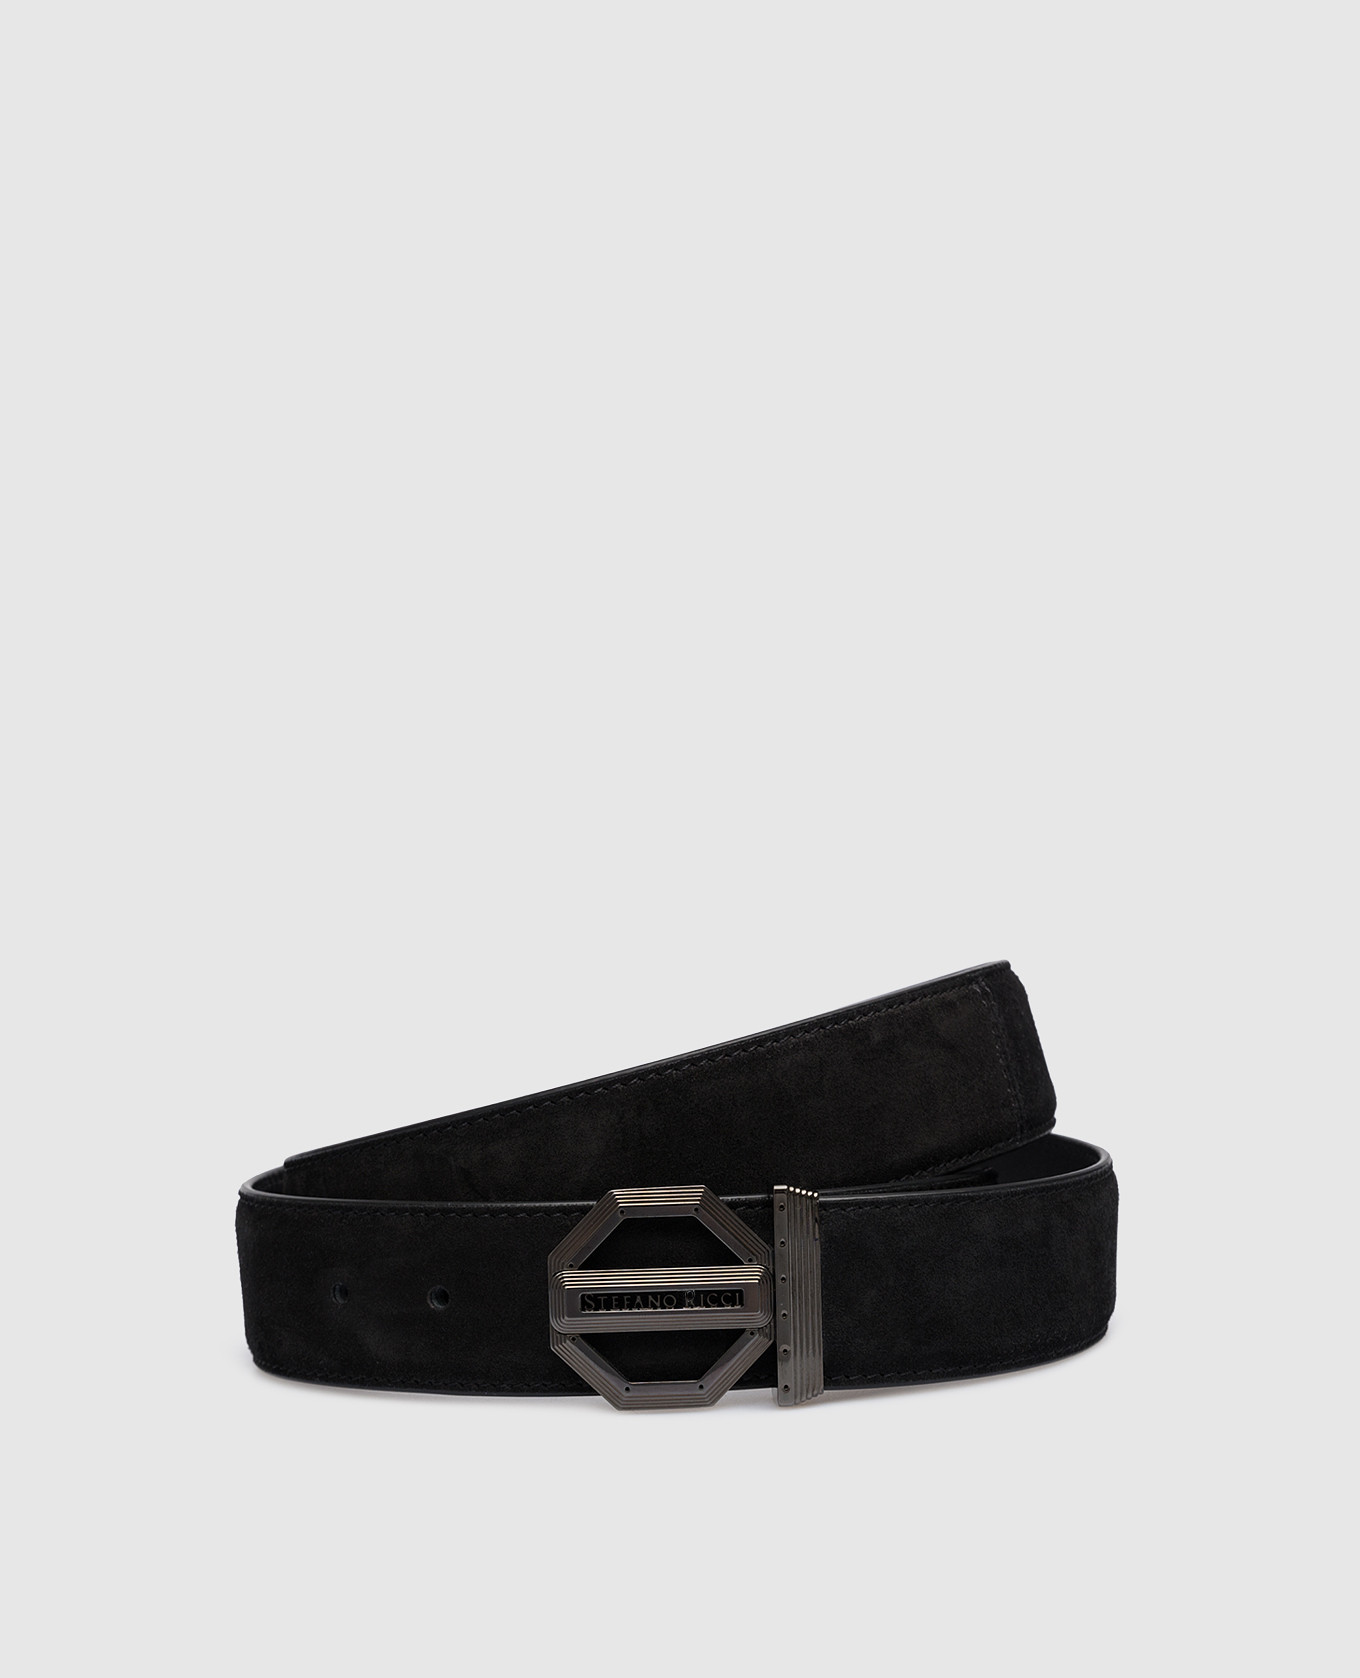 Black suede belt